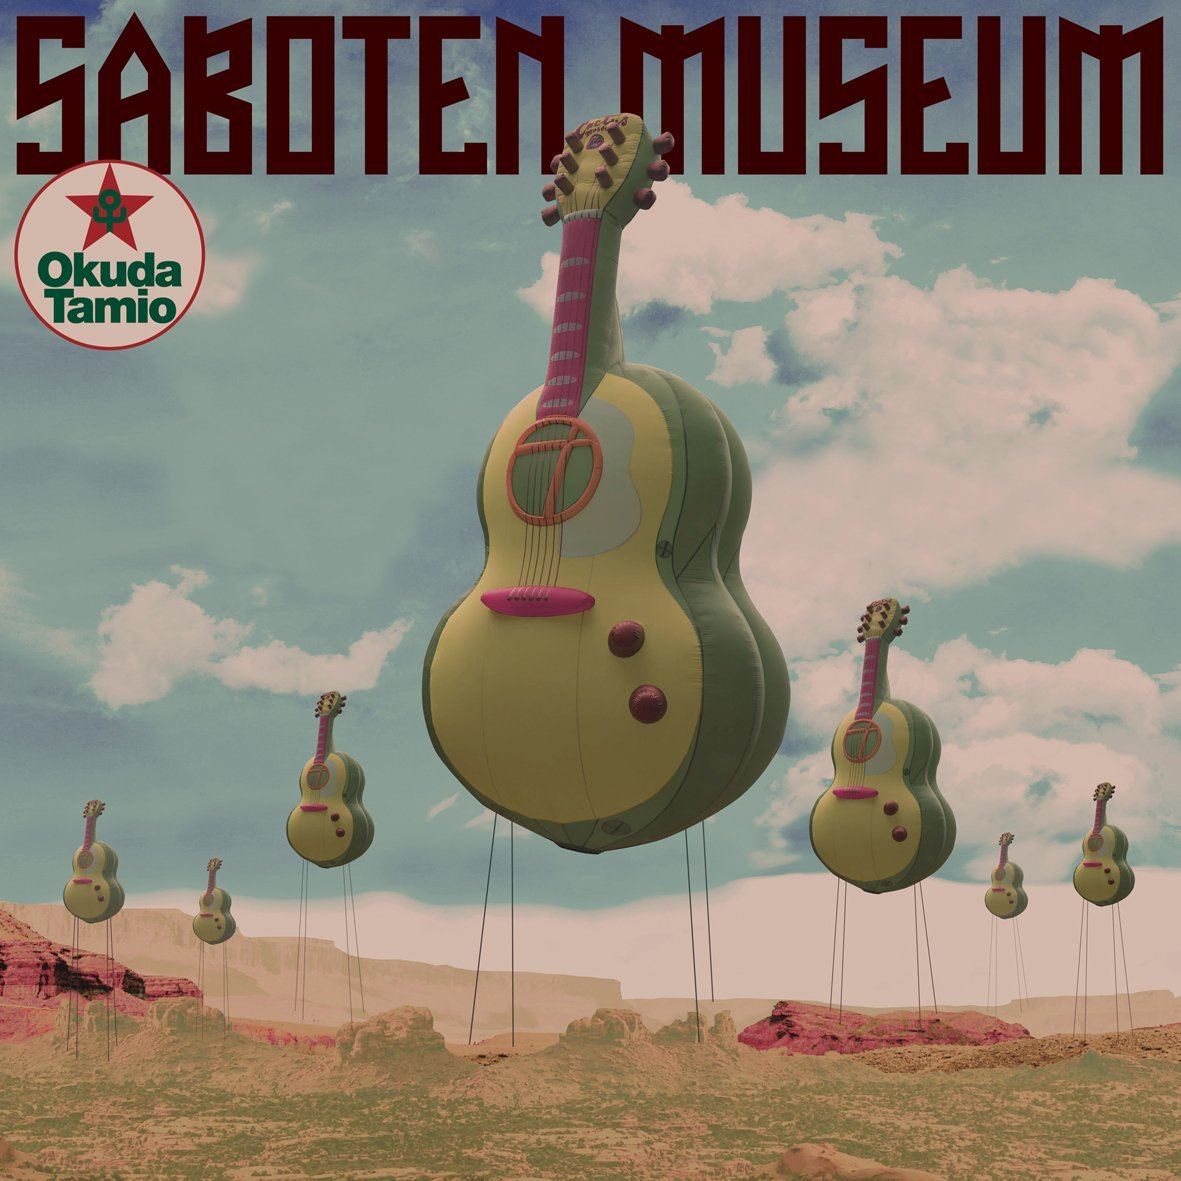 Saboten Museum (Tamio Okuda) - Bitcoin & Lightning accepted